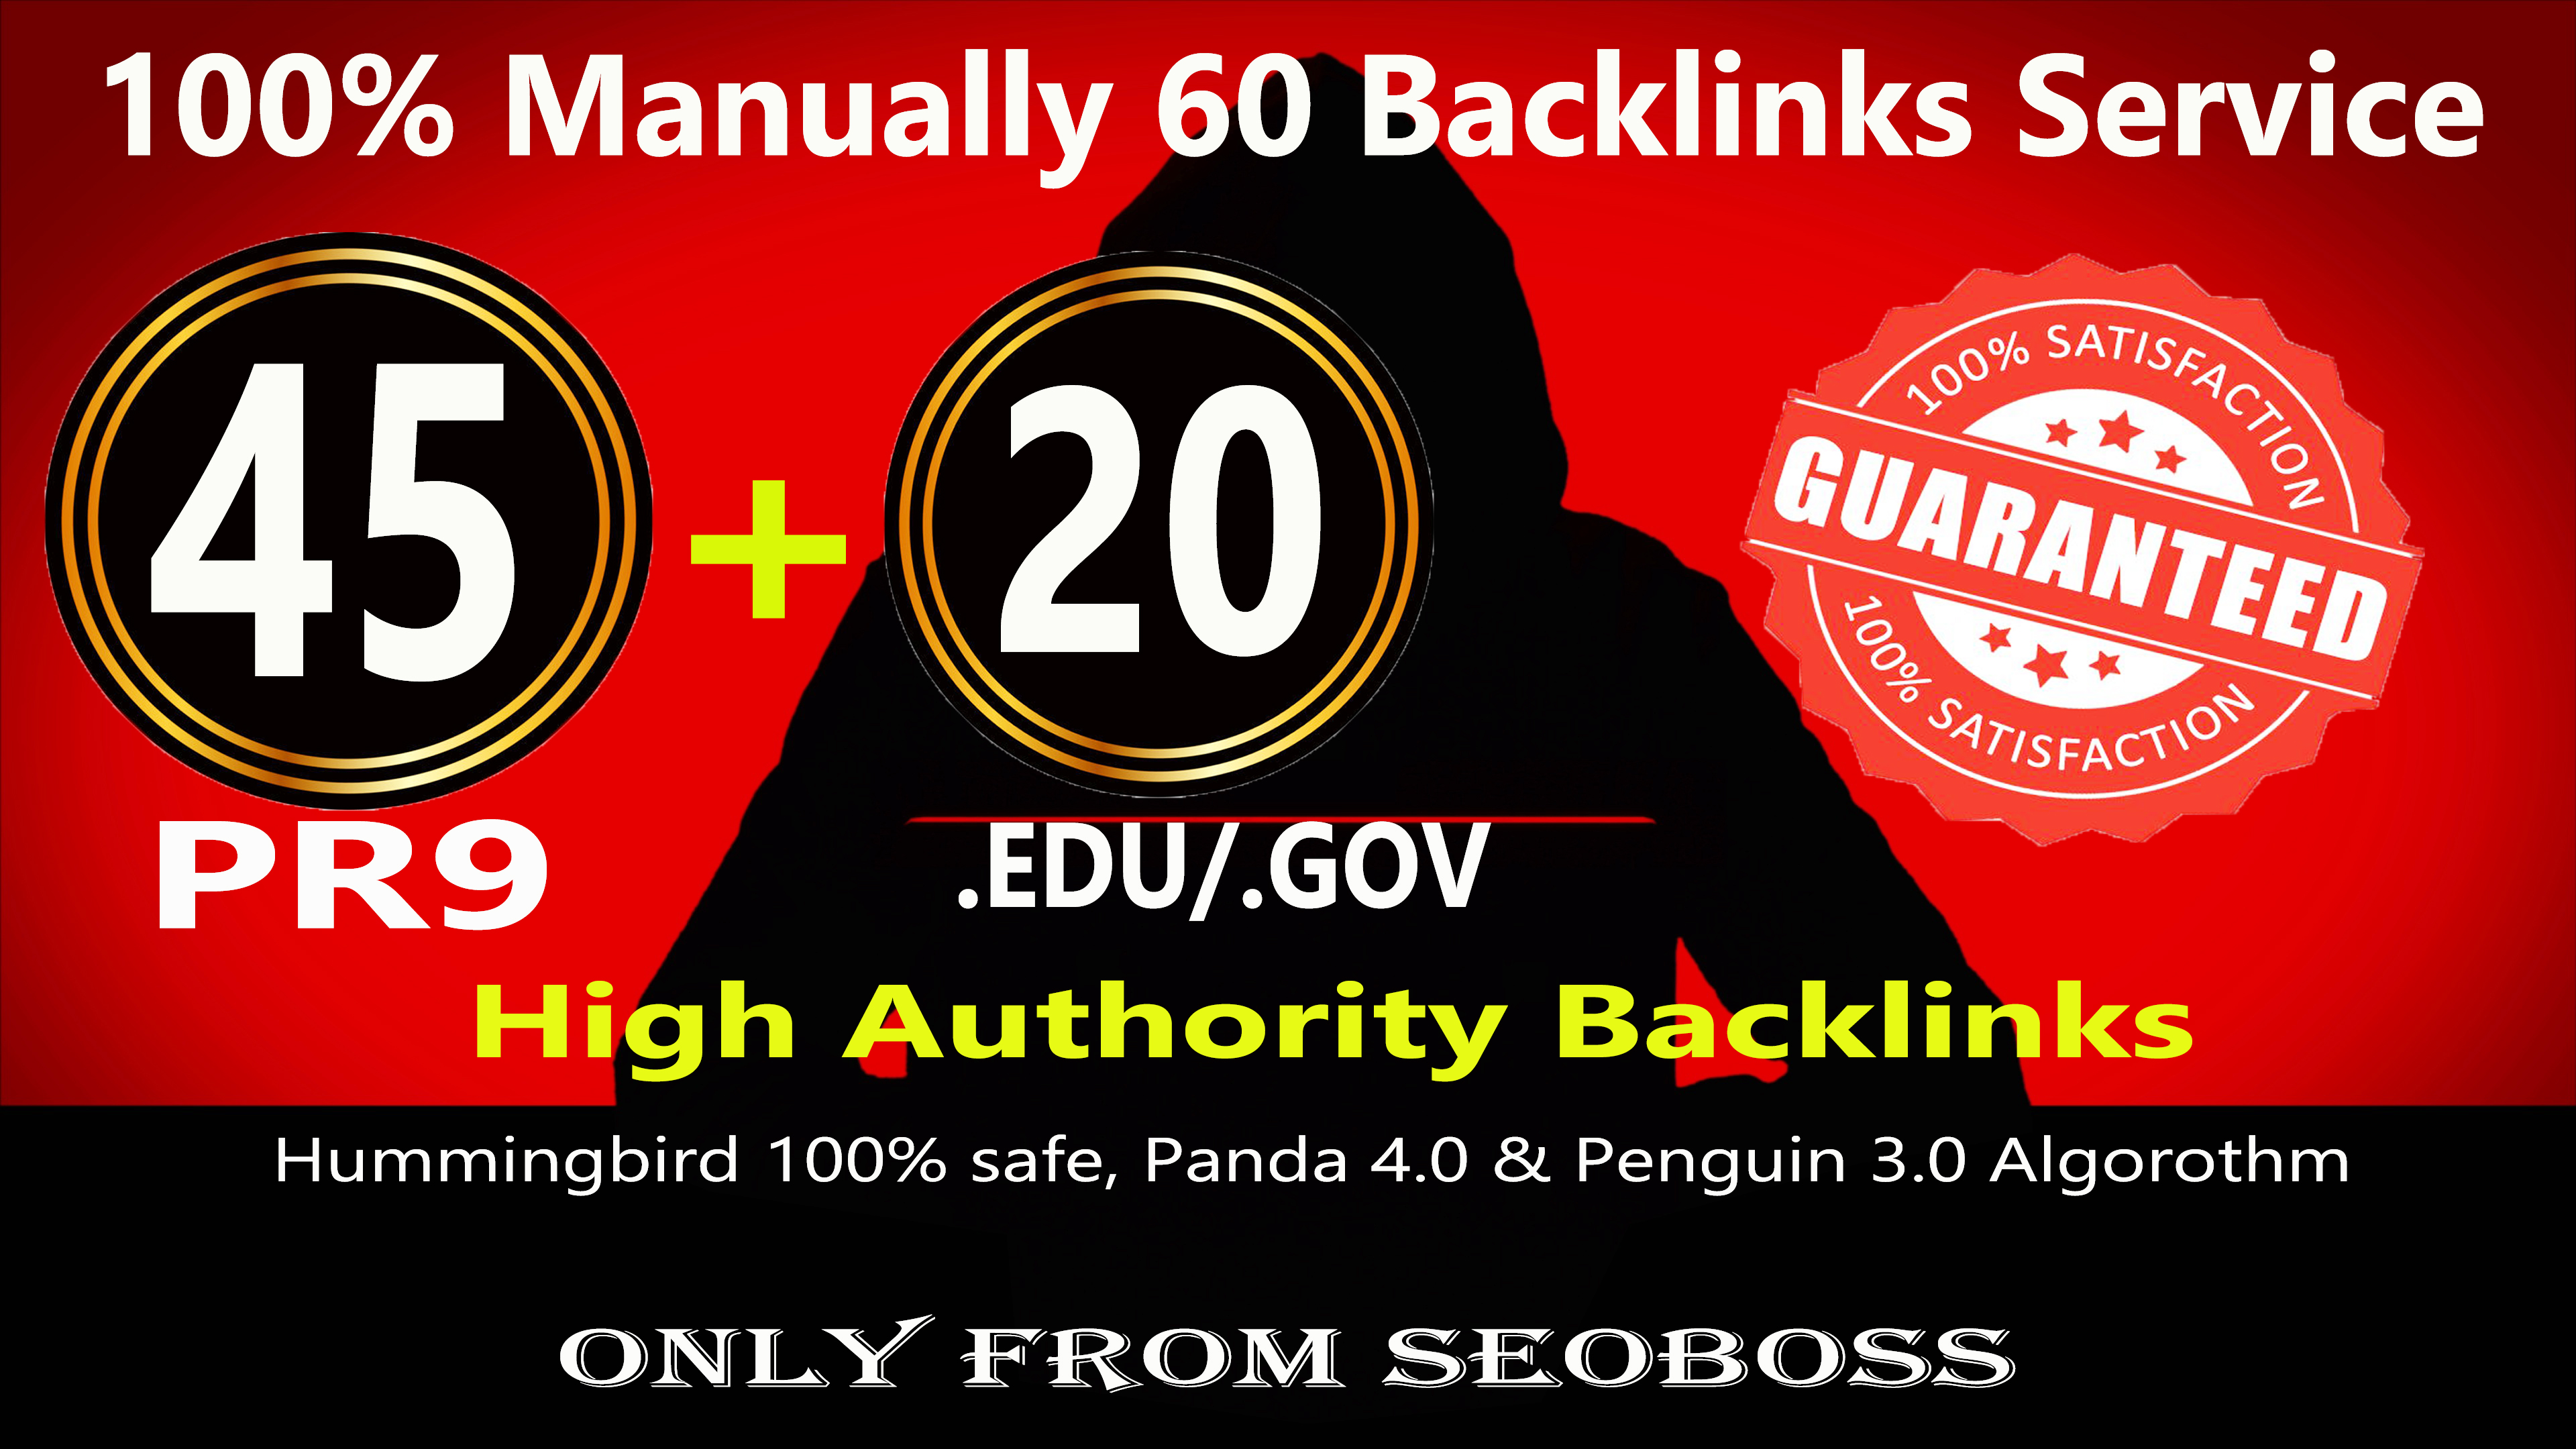 Latest and Top 70 PR10 to PR7 SEO Backlinks DA80+ With.EDU .Gov Links Boost Your Google Rank